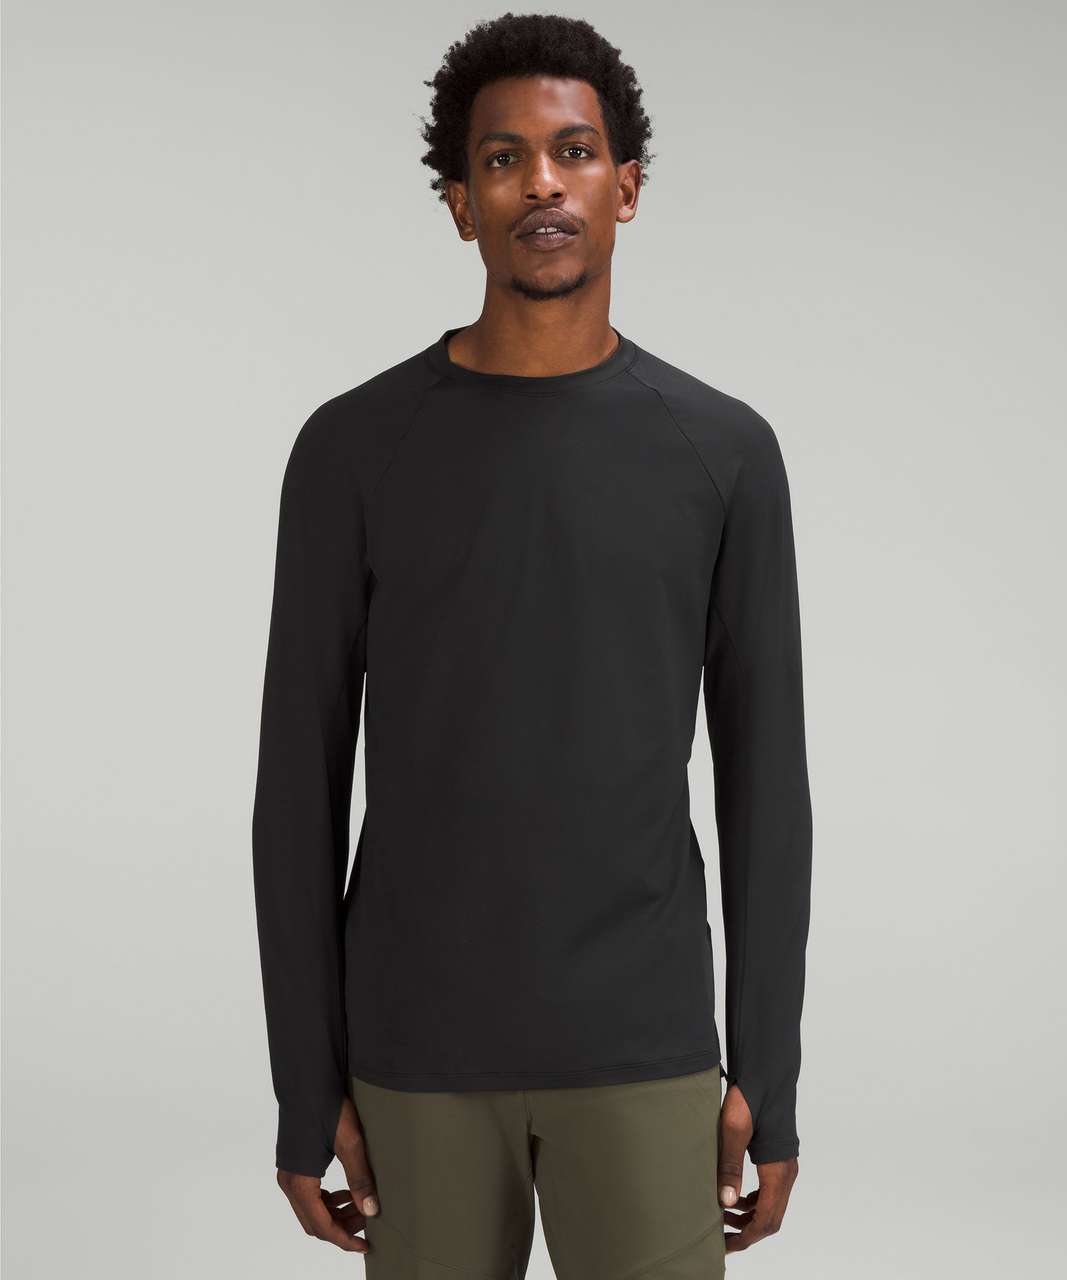 https://storage.googleapis.com/lulu-fanatics/product/78357/1280/lululemon-rulu-fleece-base-layer-hiking-long-sleeve-shirt-black-0001-416701.jpg